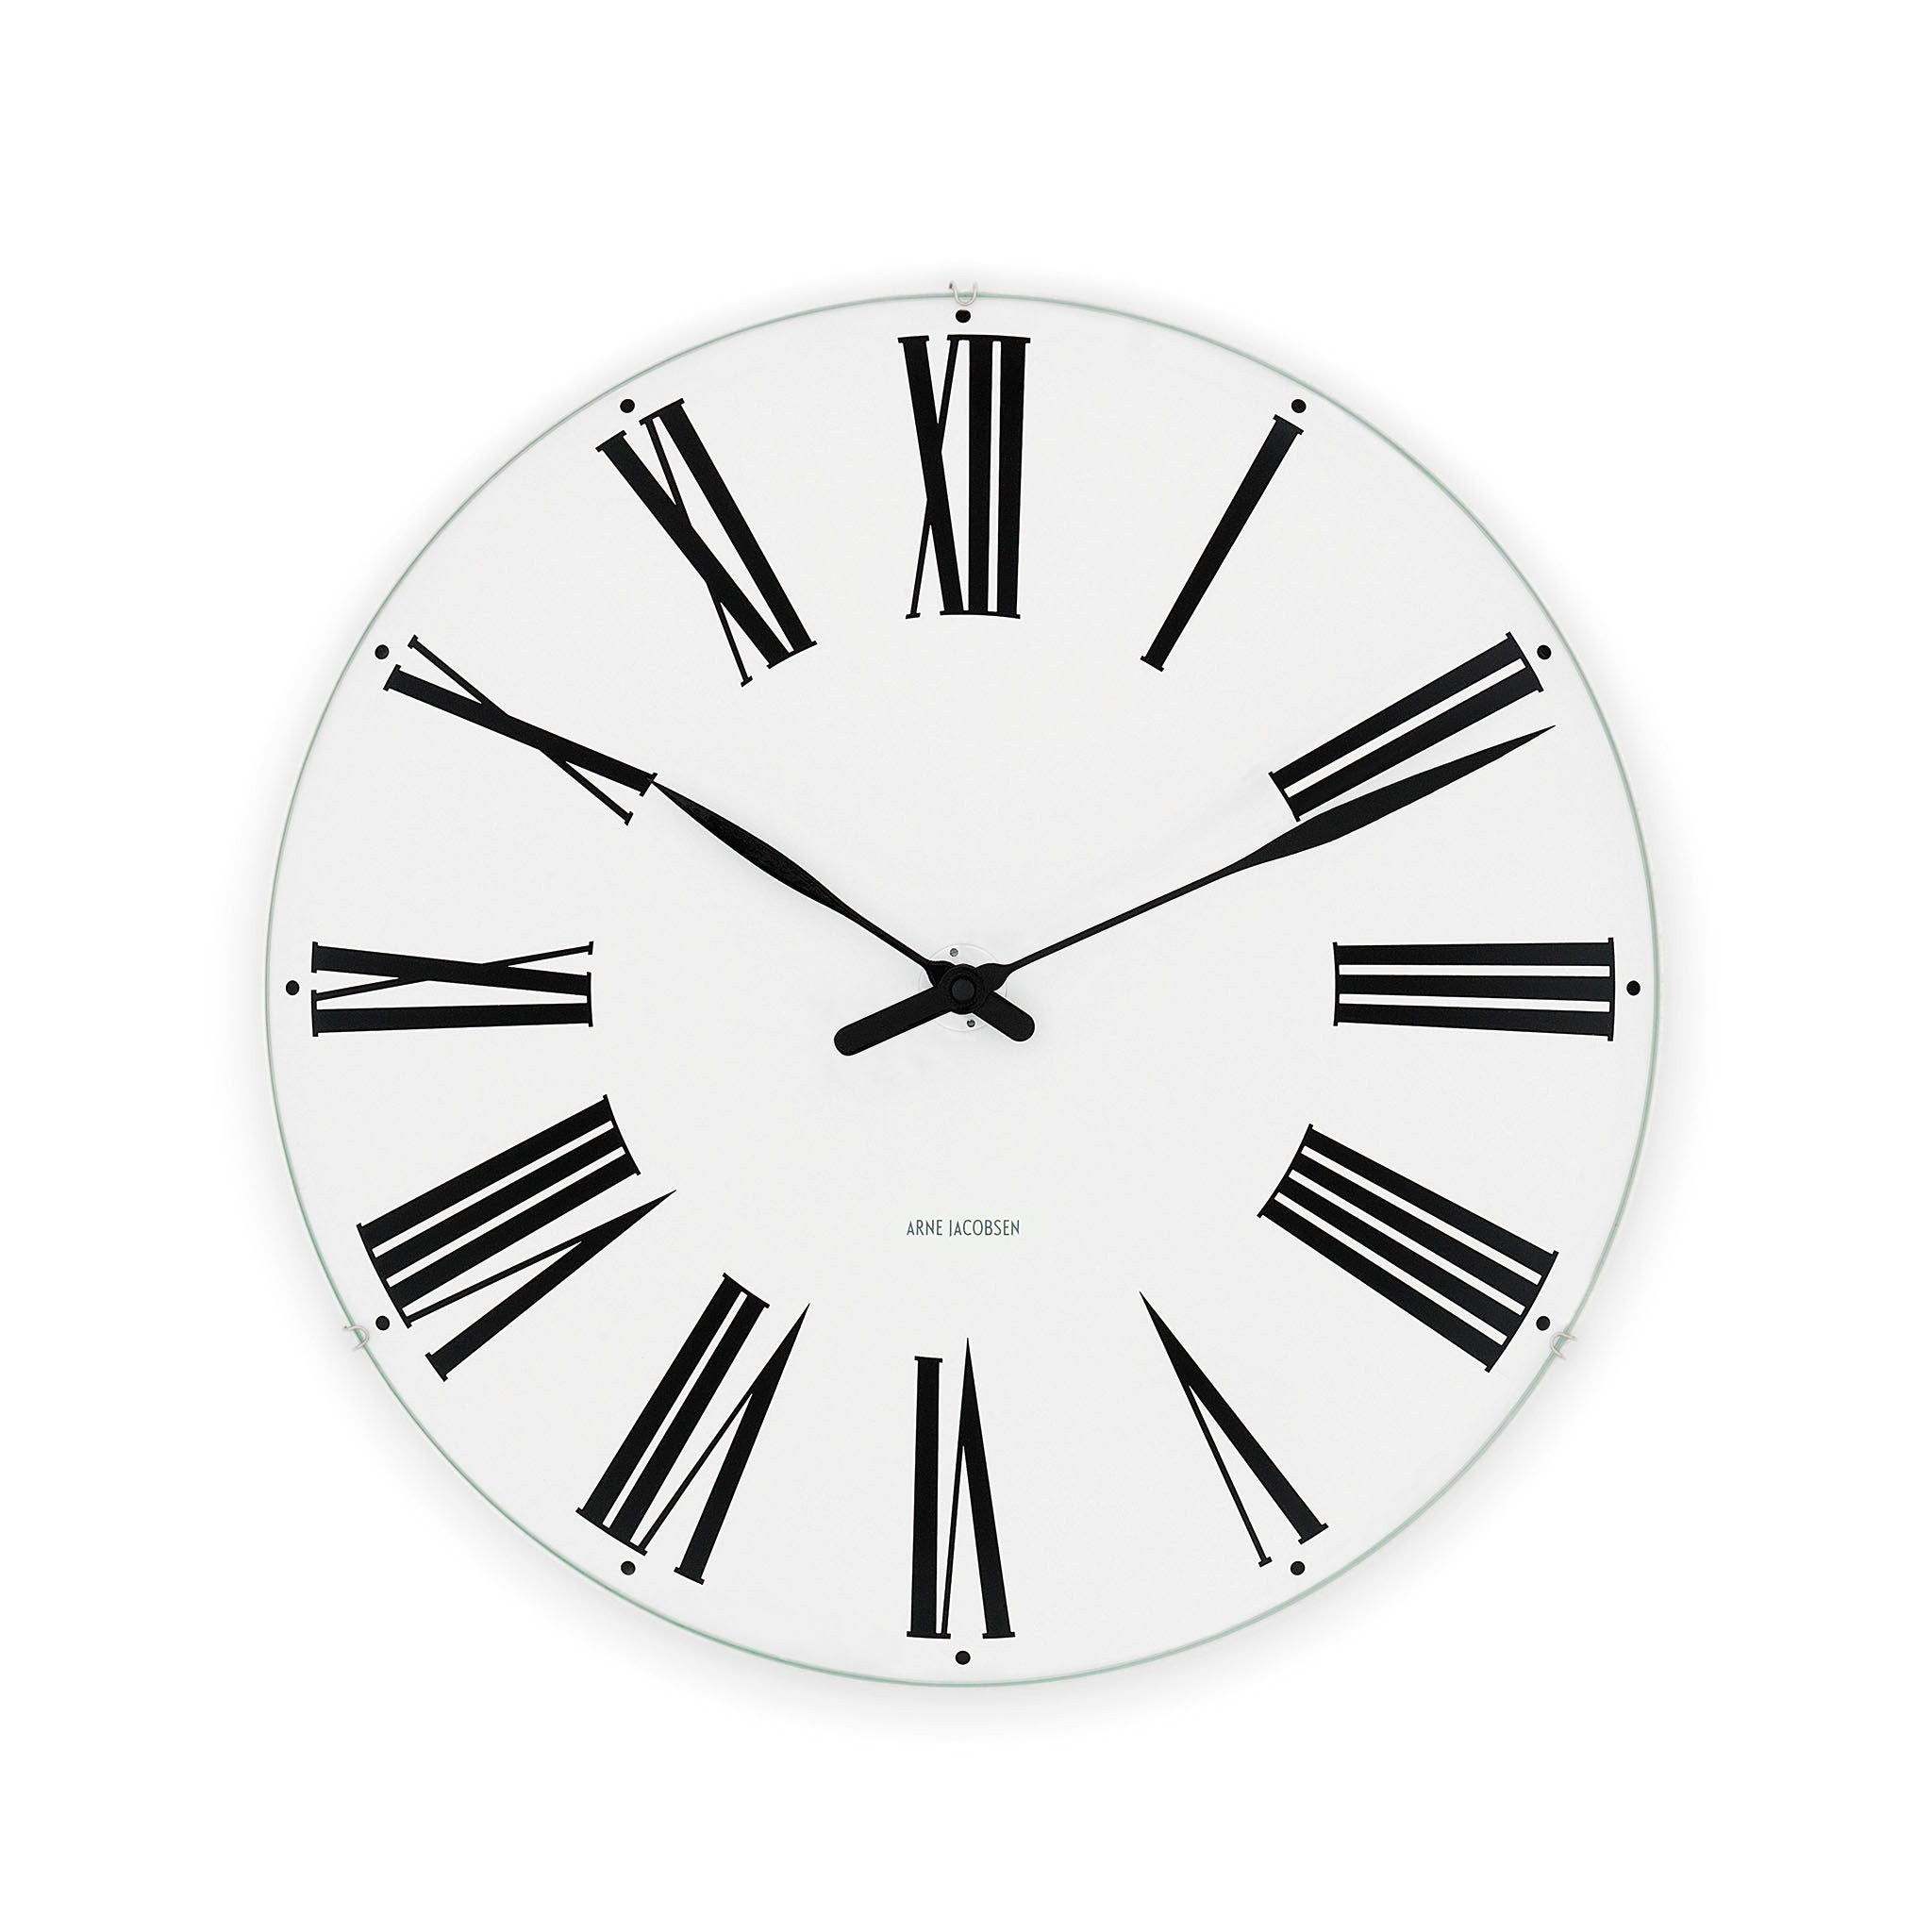 Arne Jacobsen Roman Wall Clock, 19" / 48 cm